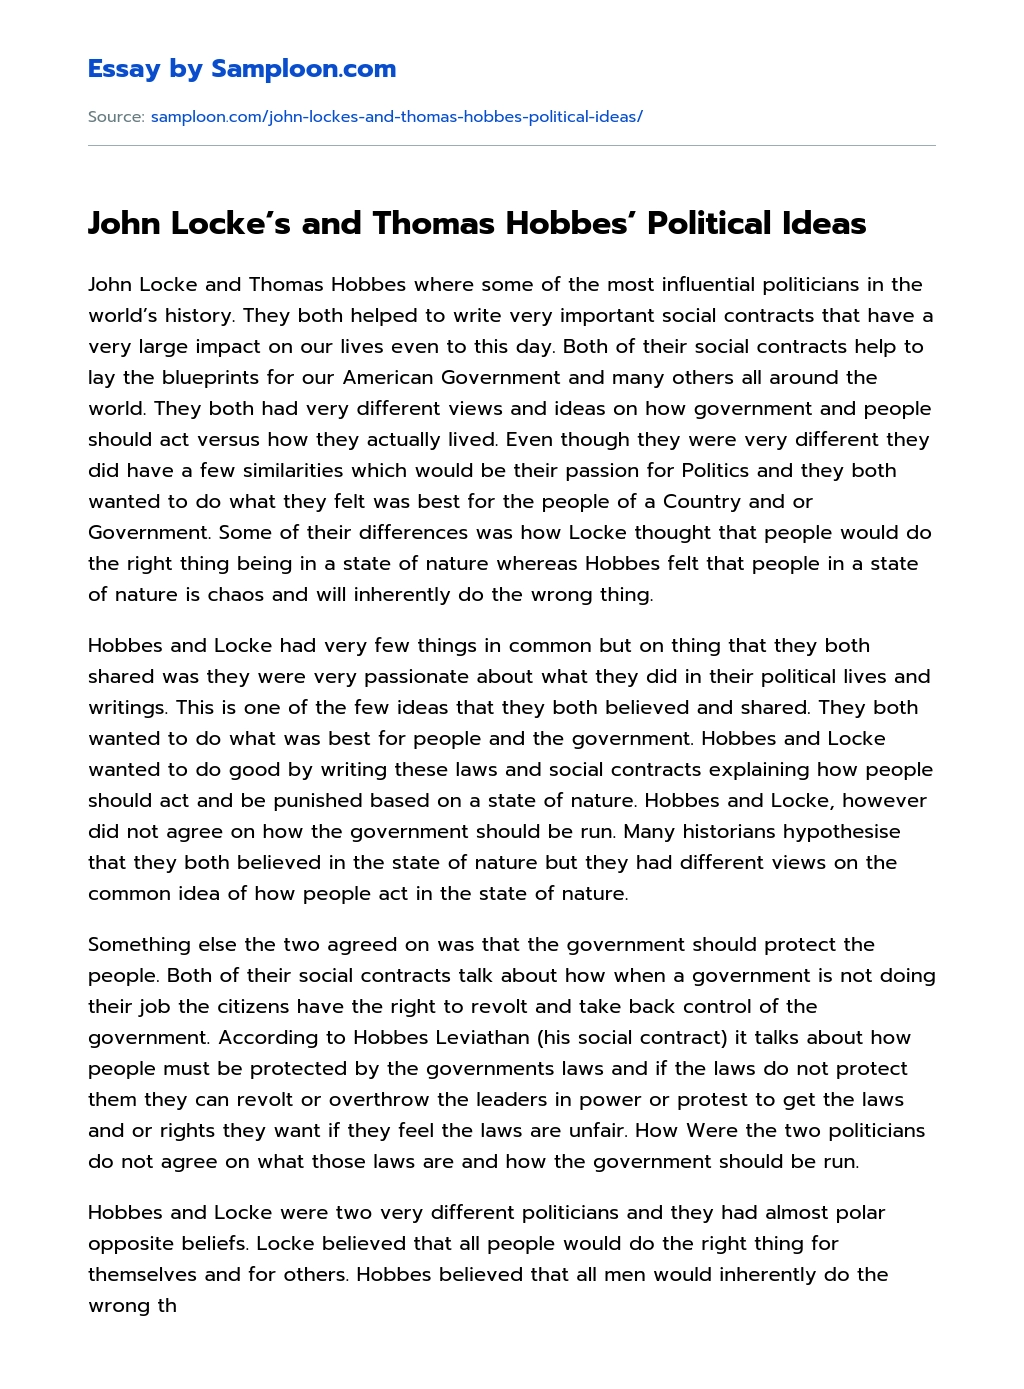 John Locke’s and Thomas Hobbes’ Political Ideas essay